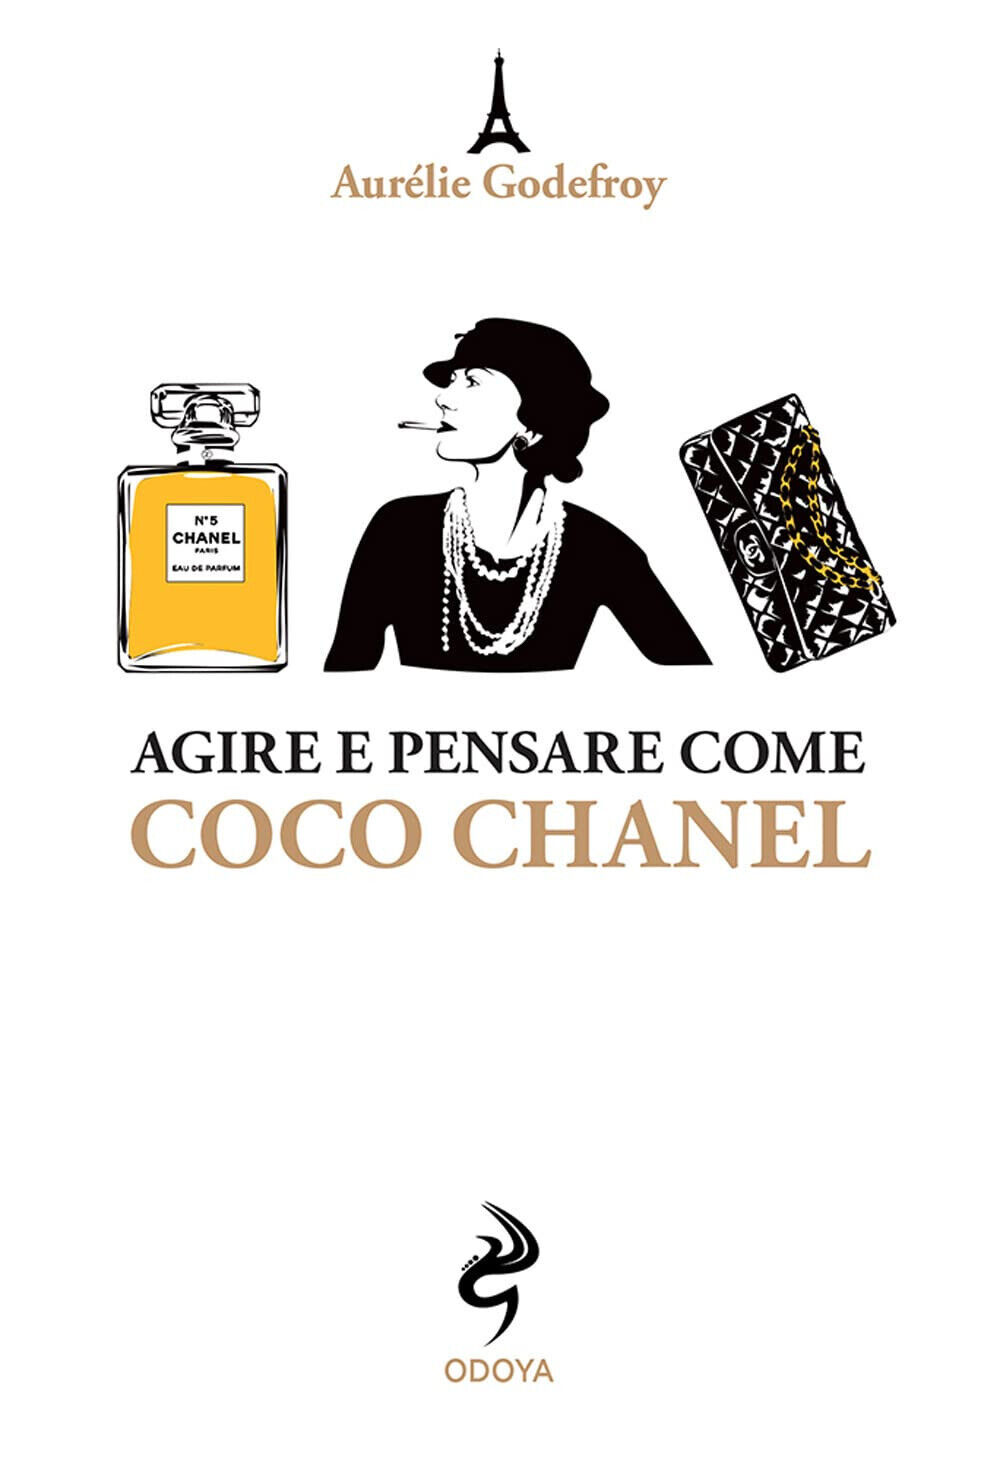 Agire e pensare come Coco Chanel - Aurelie Godefroy - odoya, 2021